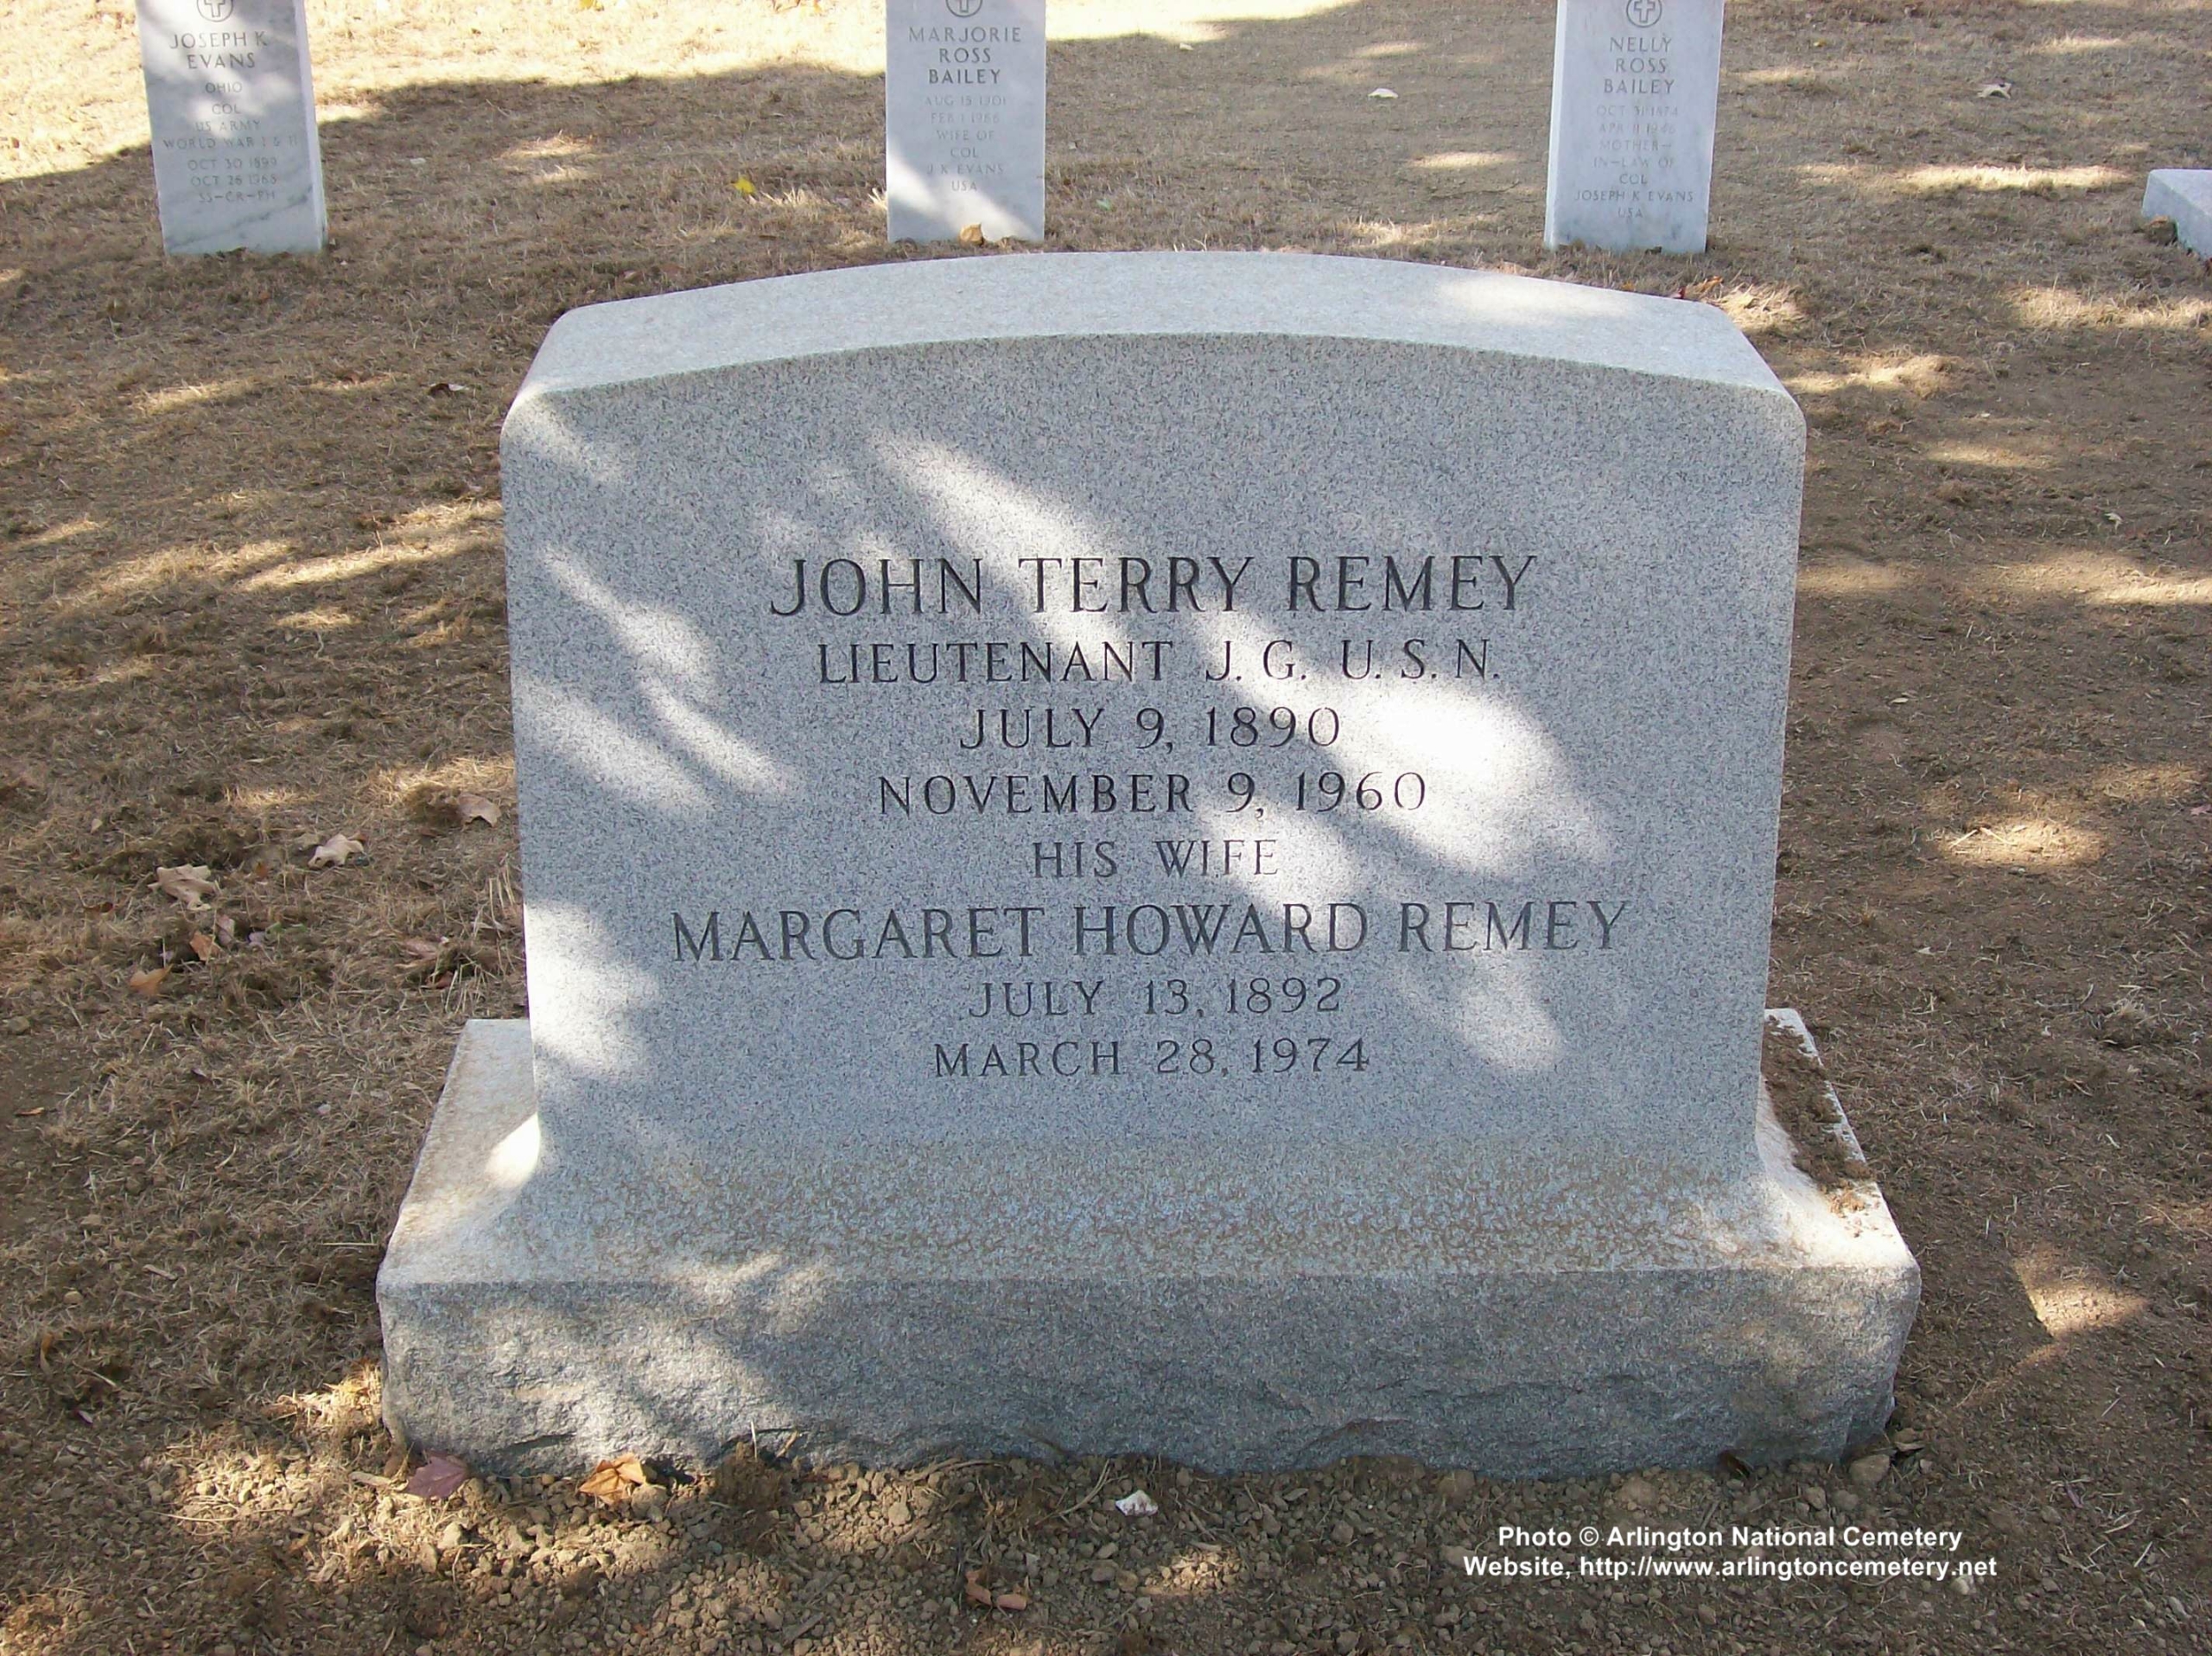 jtremey-gravesite-photo-october-2007-001